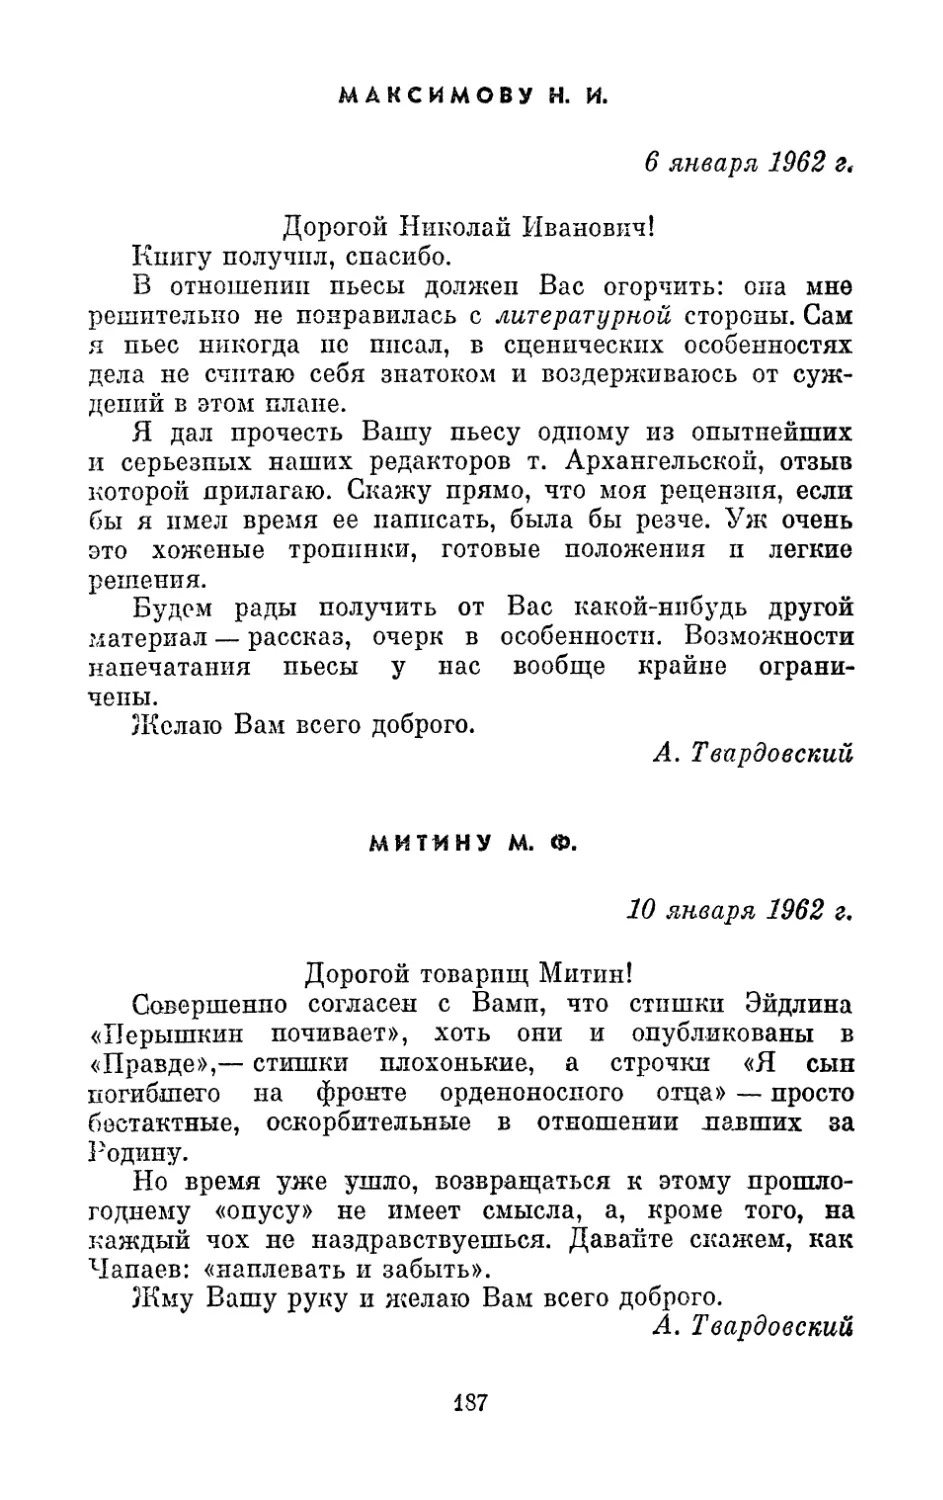 Максимову Н. И., 6 января 1962 г.
Митину М. Ф., 10 января 1962 г.